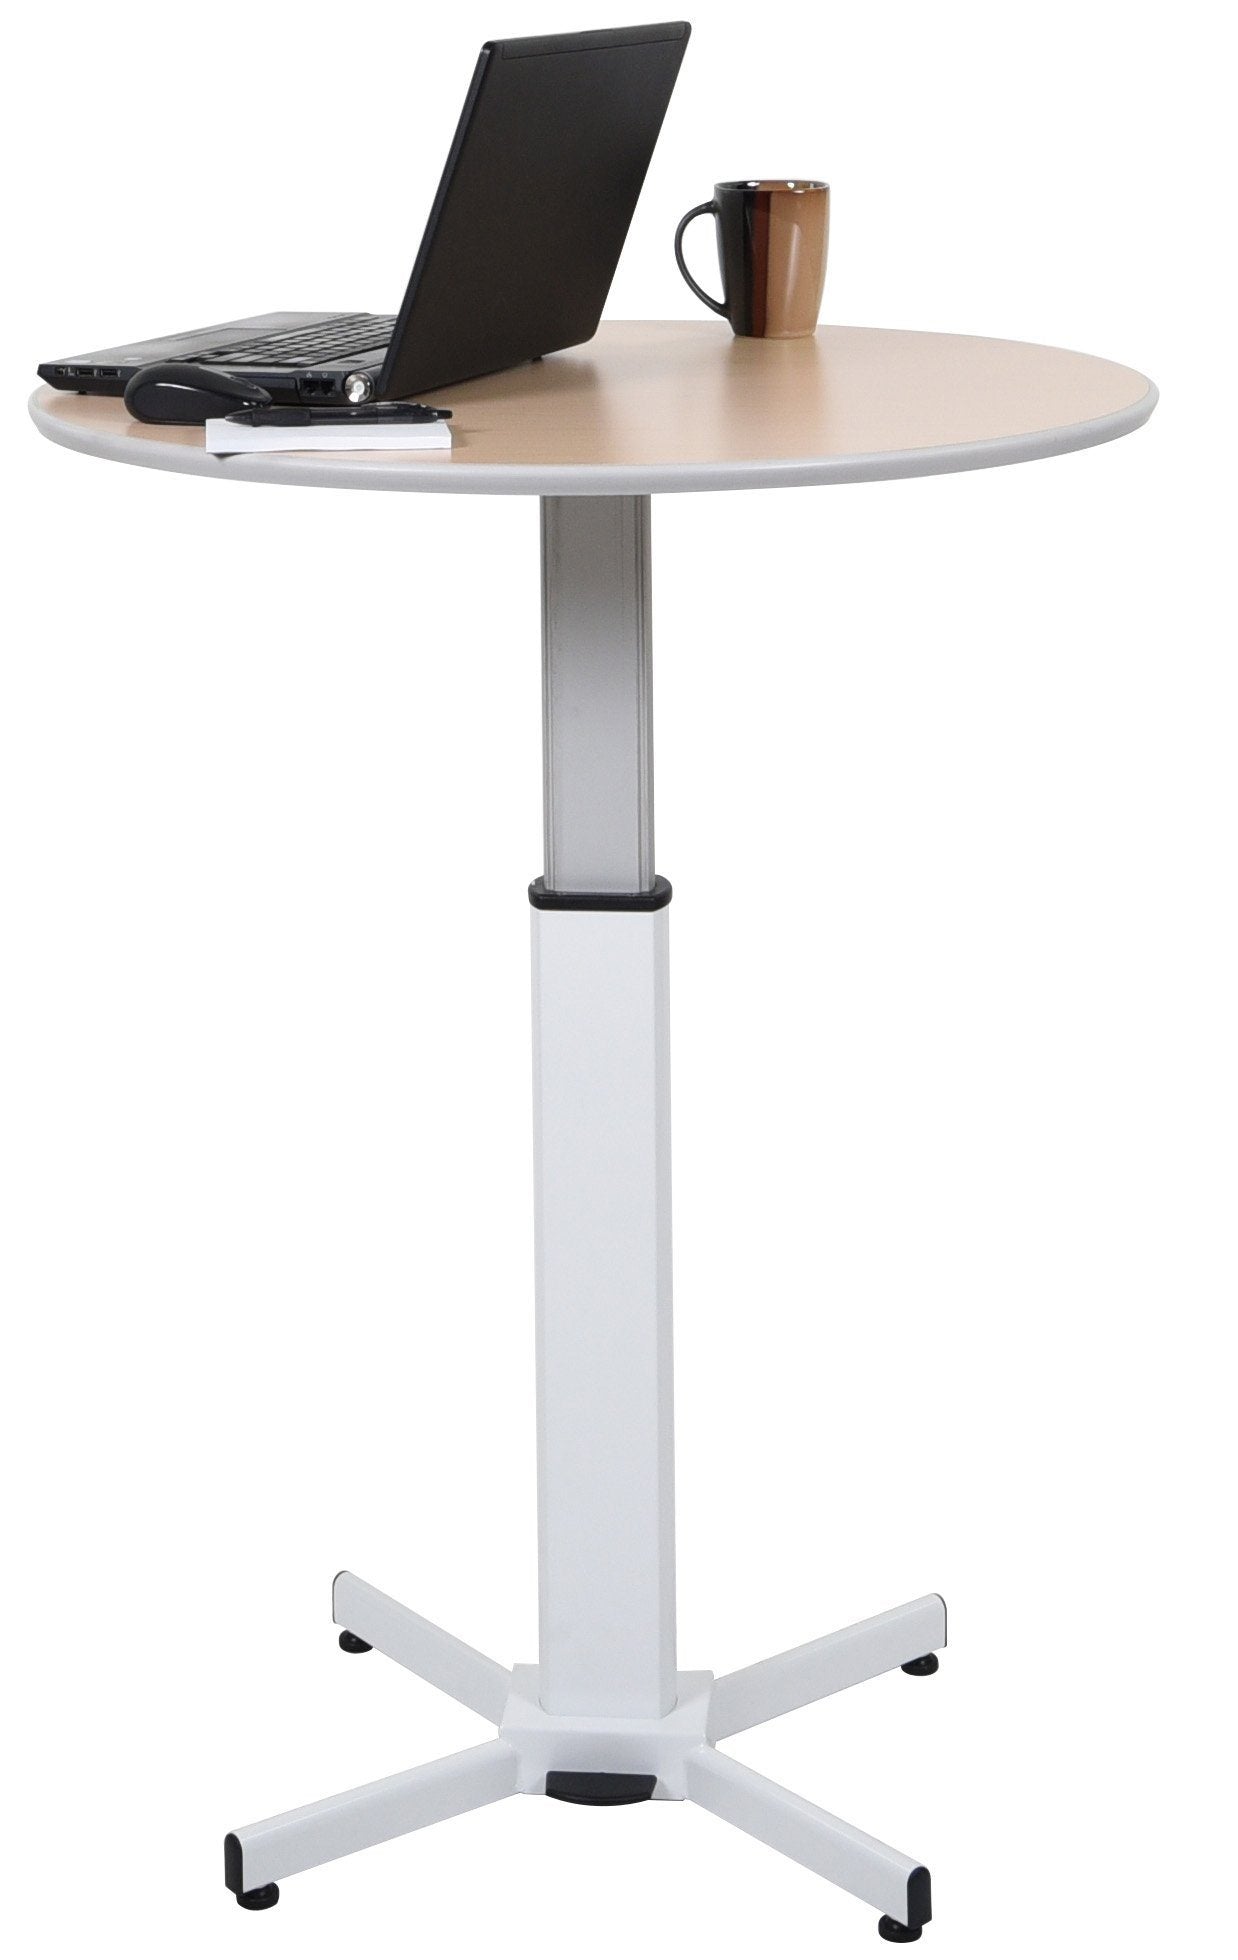 Luxor - LX-PNADJ-ROUND - Pneumatic Adjustable Round Pedestal Table.